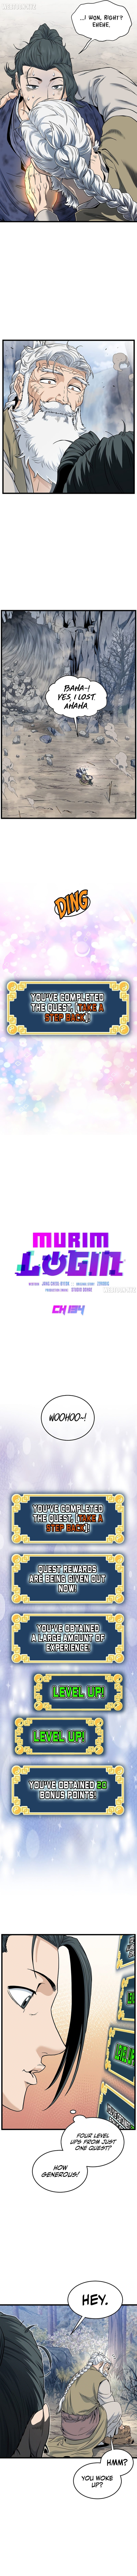 murim-login-chap-134-3